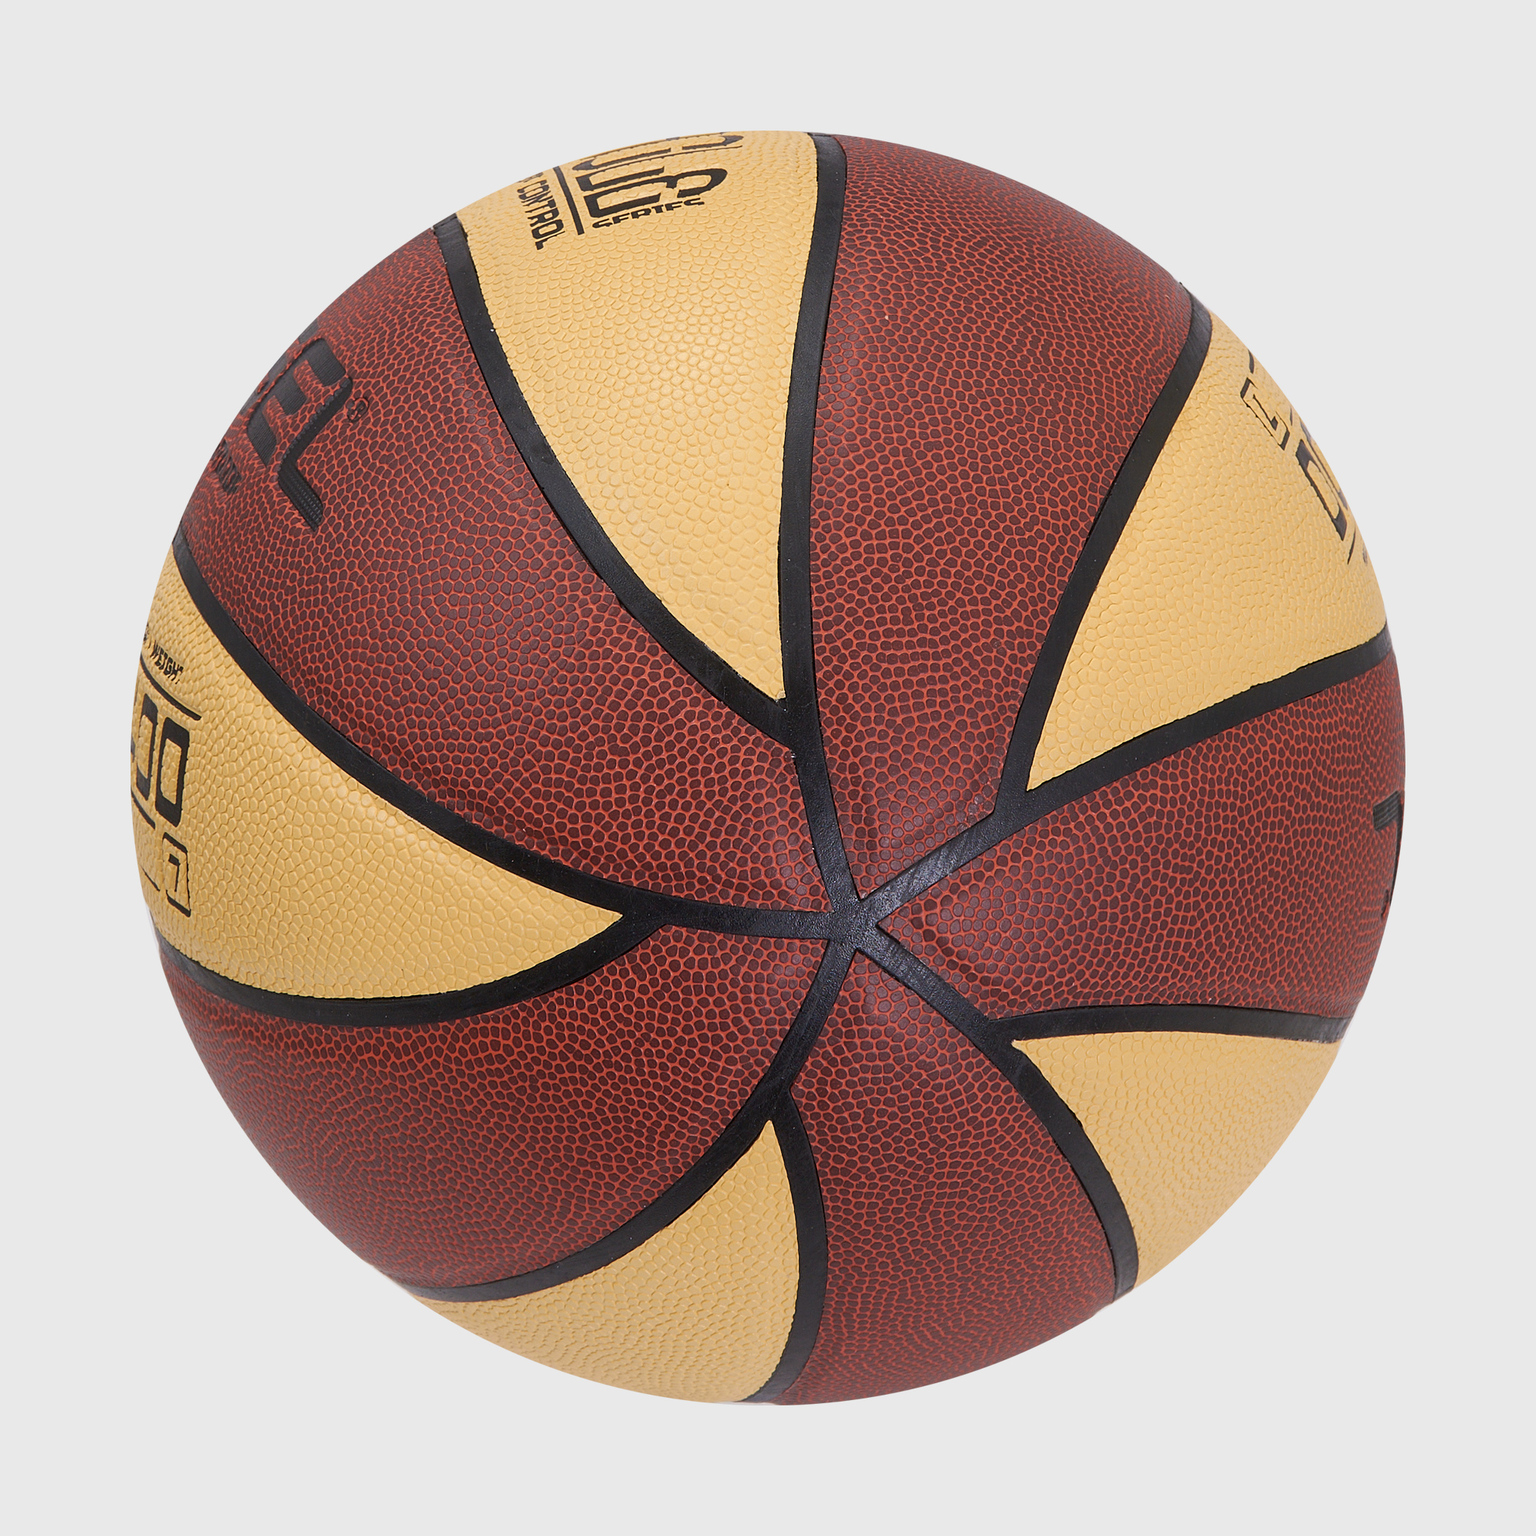 Баскетбольный мяч Jogel JB-400 УТ-00018771